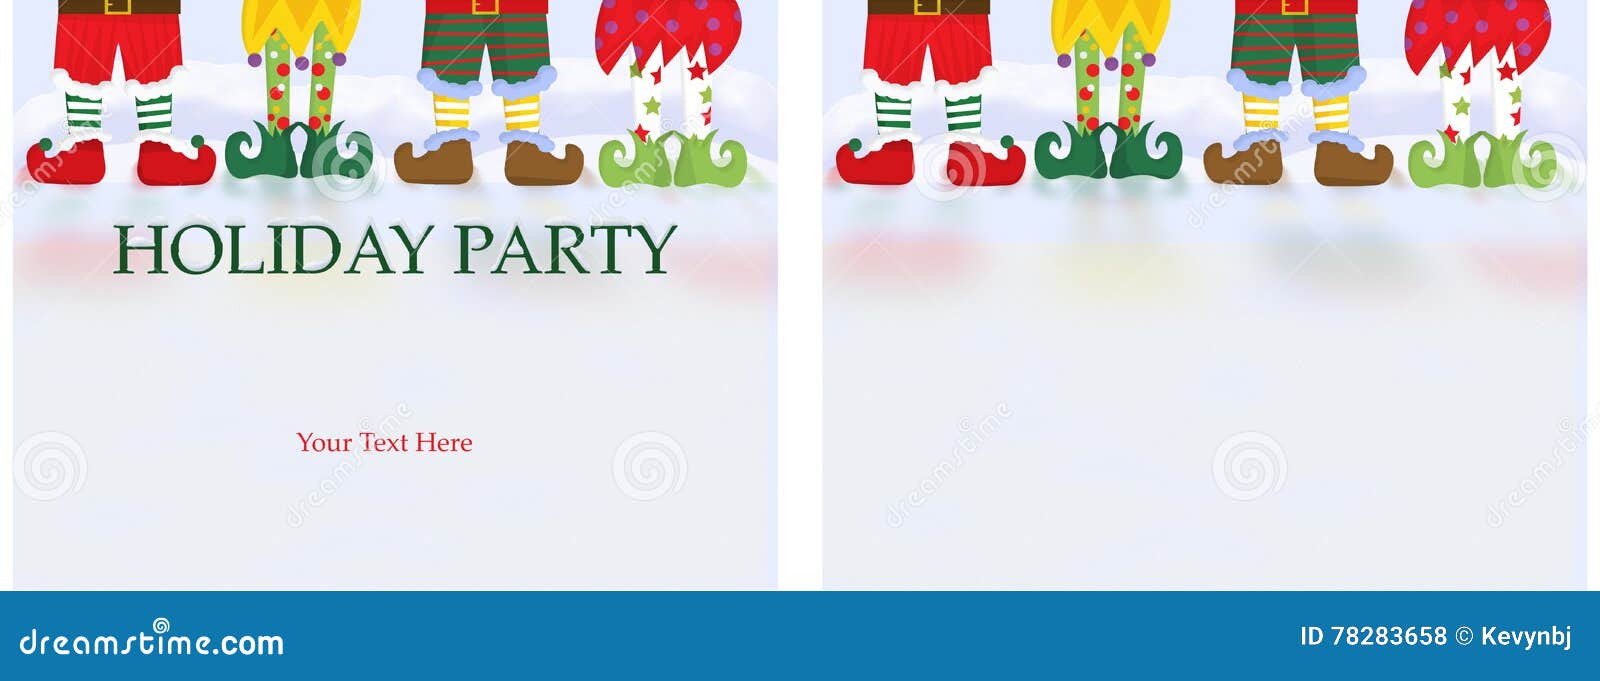 christmas party invitation card